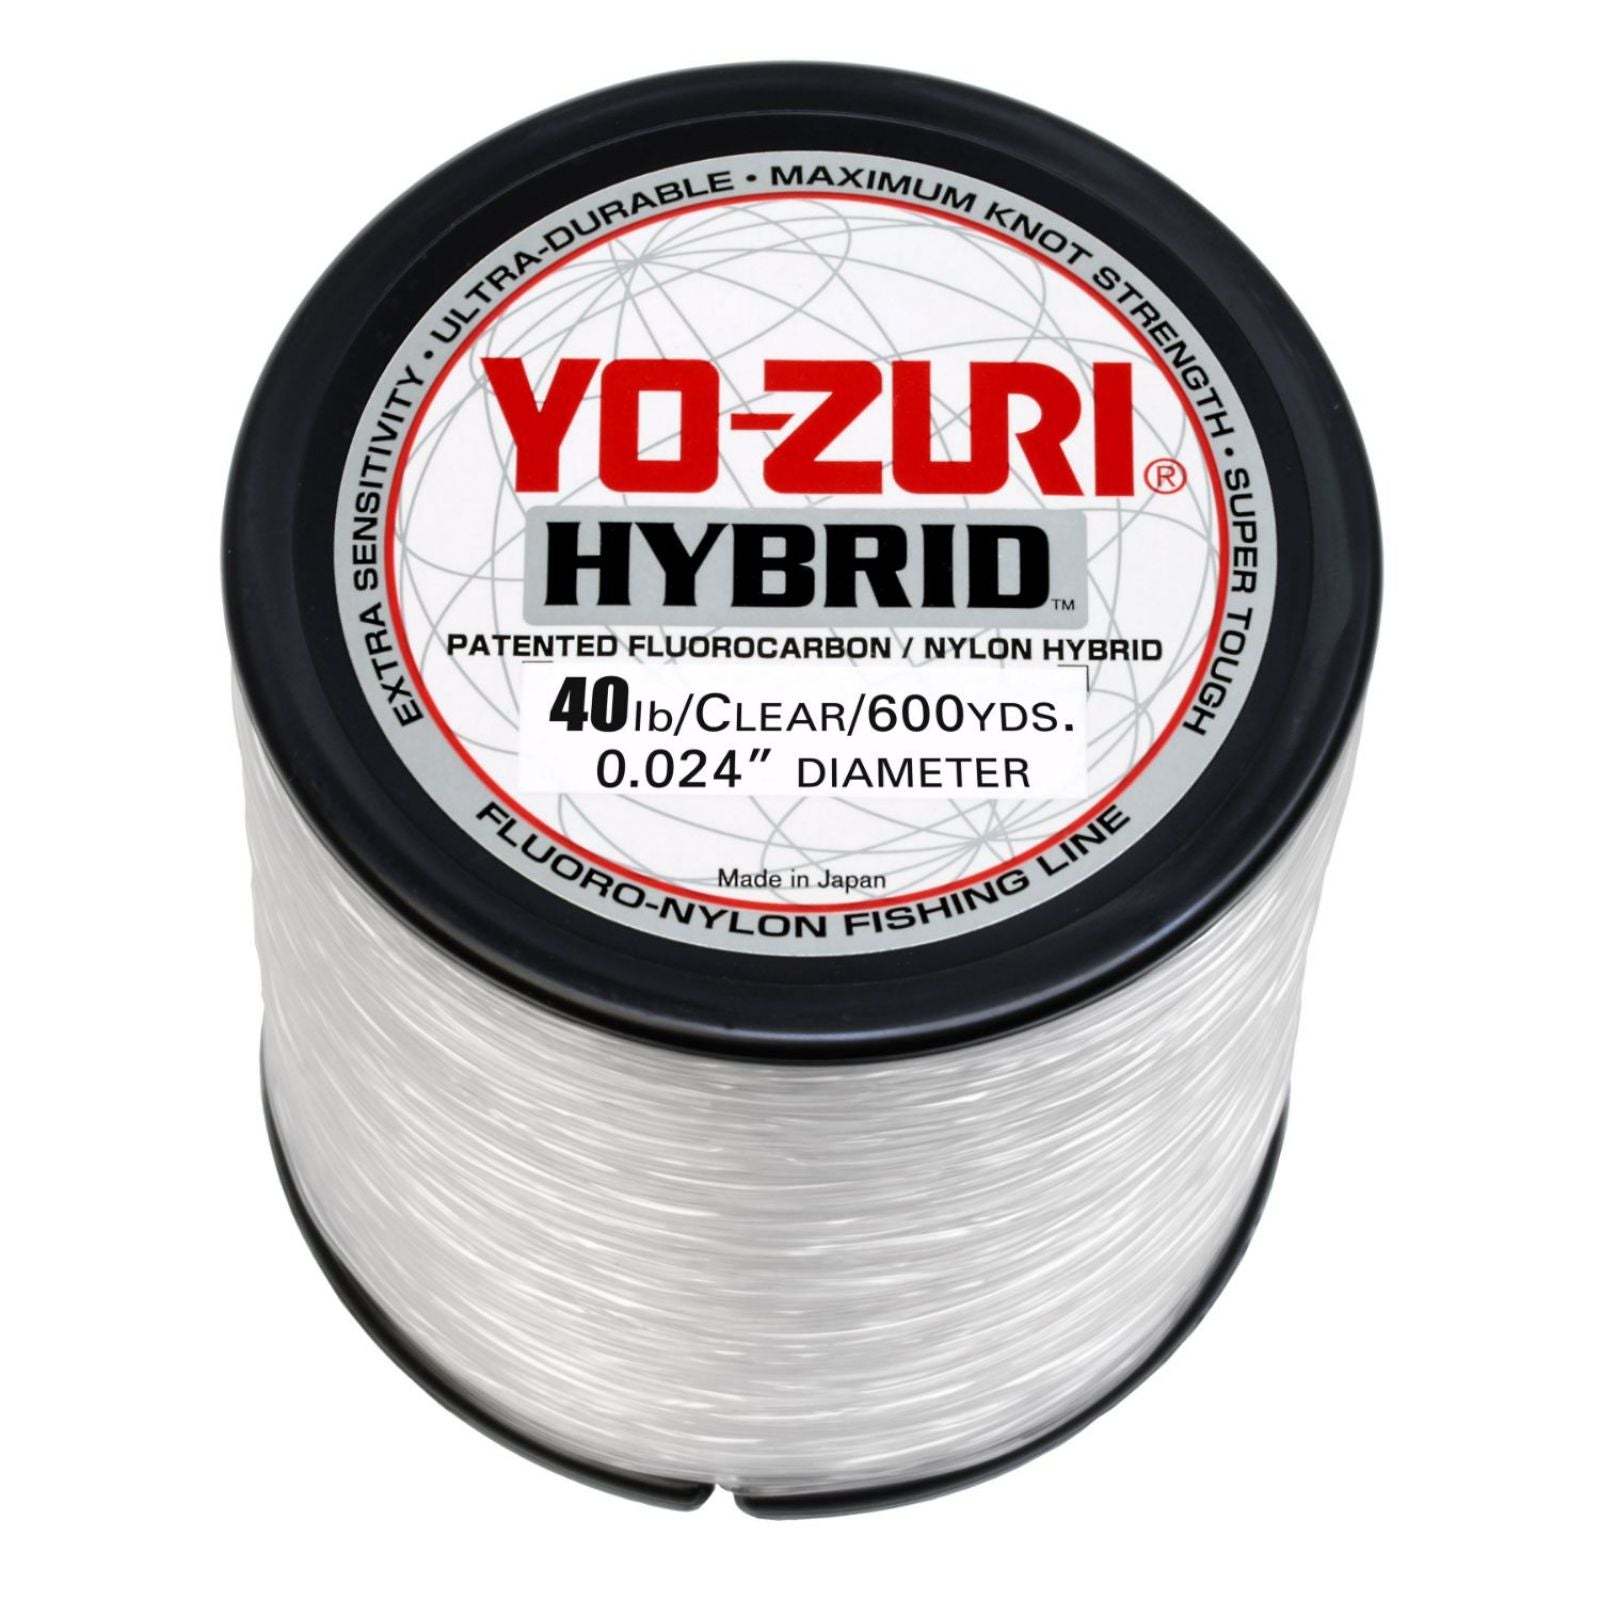 40LB 600YD Yo-Zuri Hybrid Clear Line Spool from Fish On Outlet